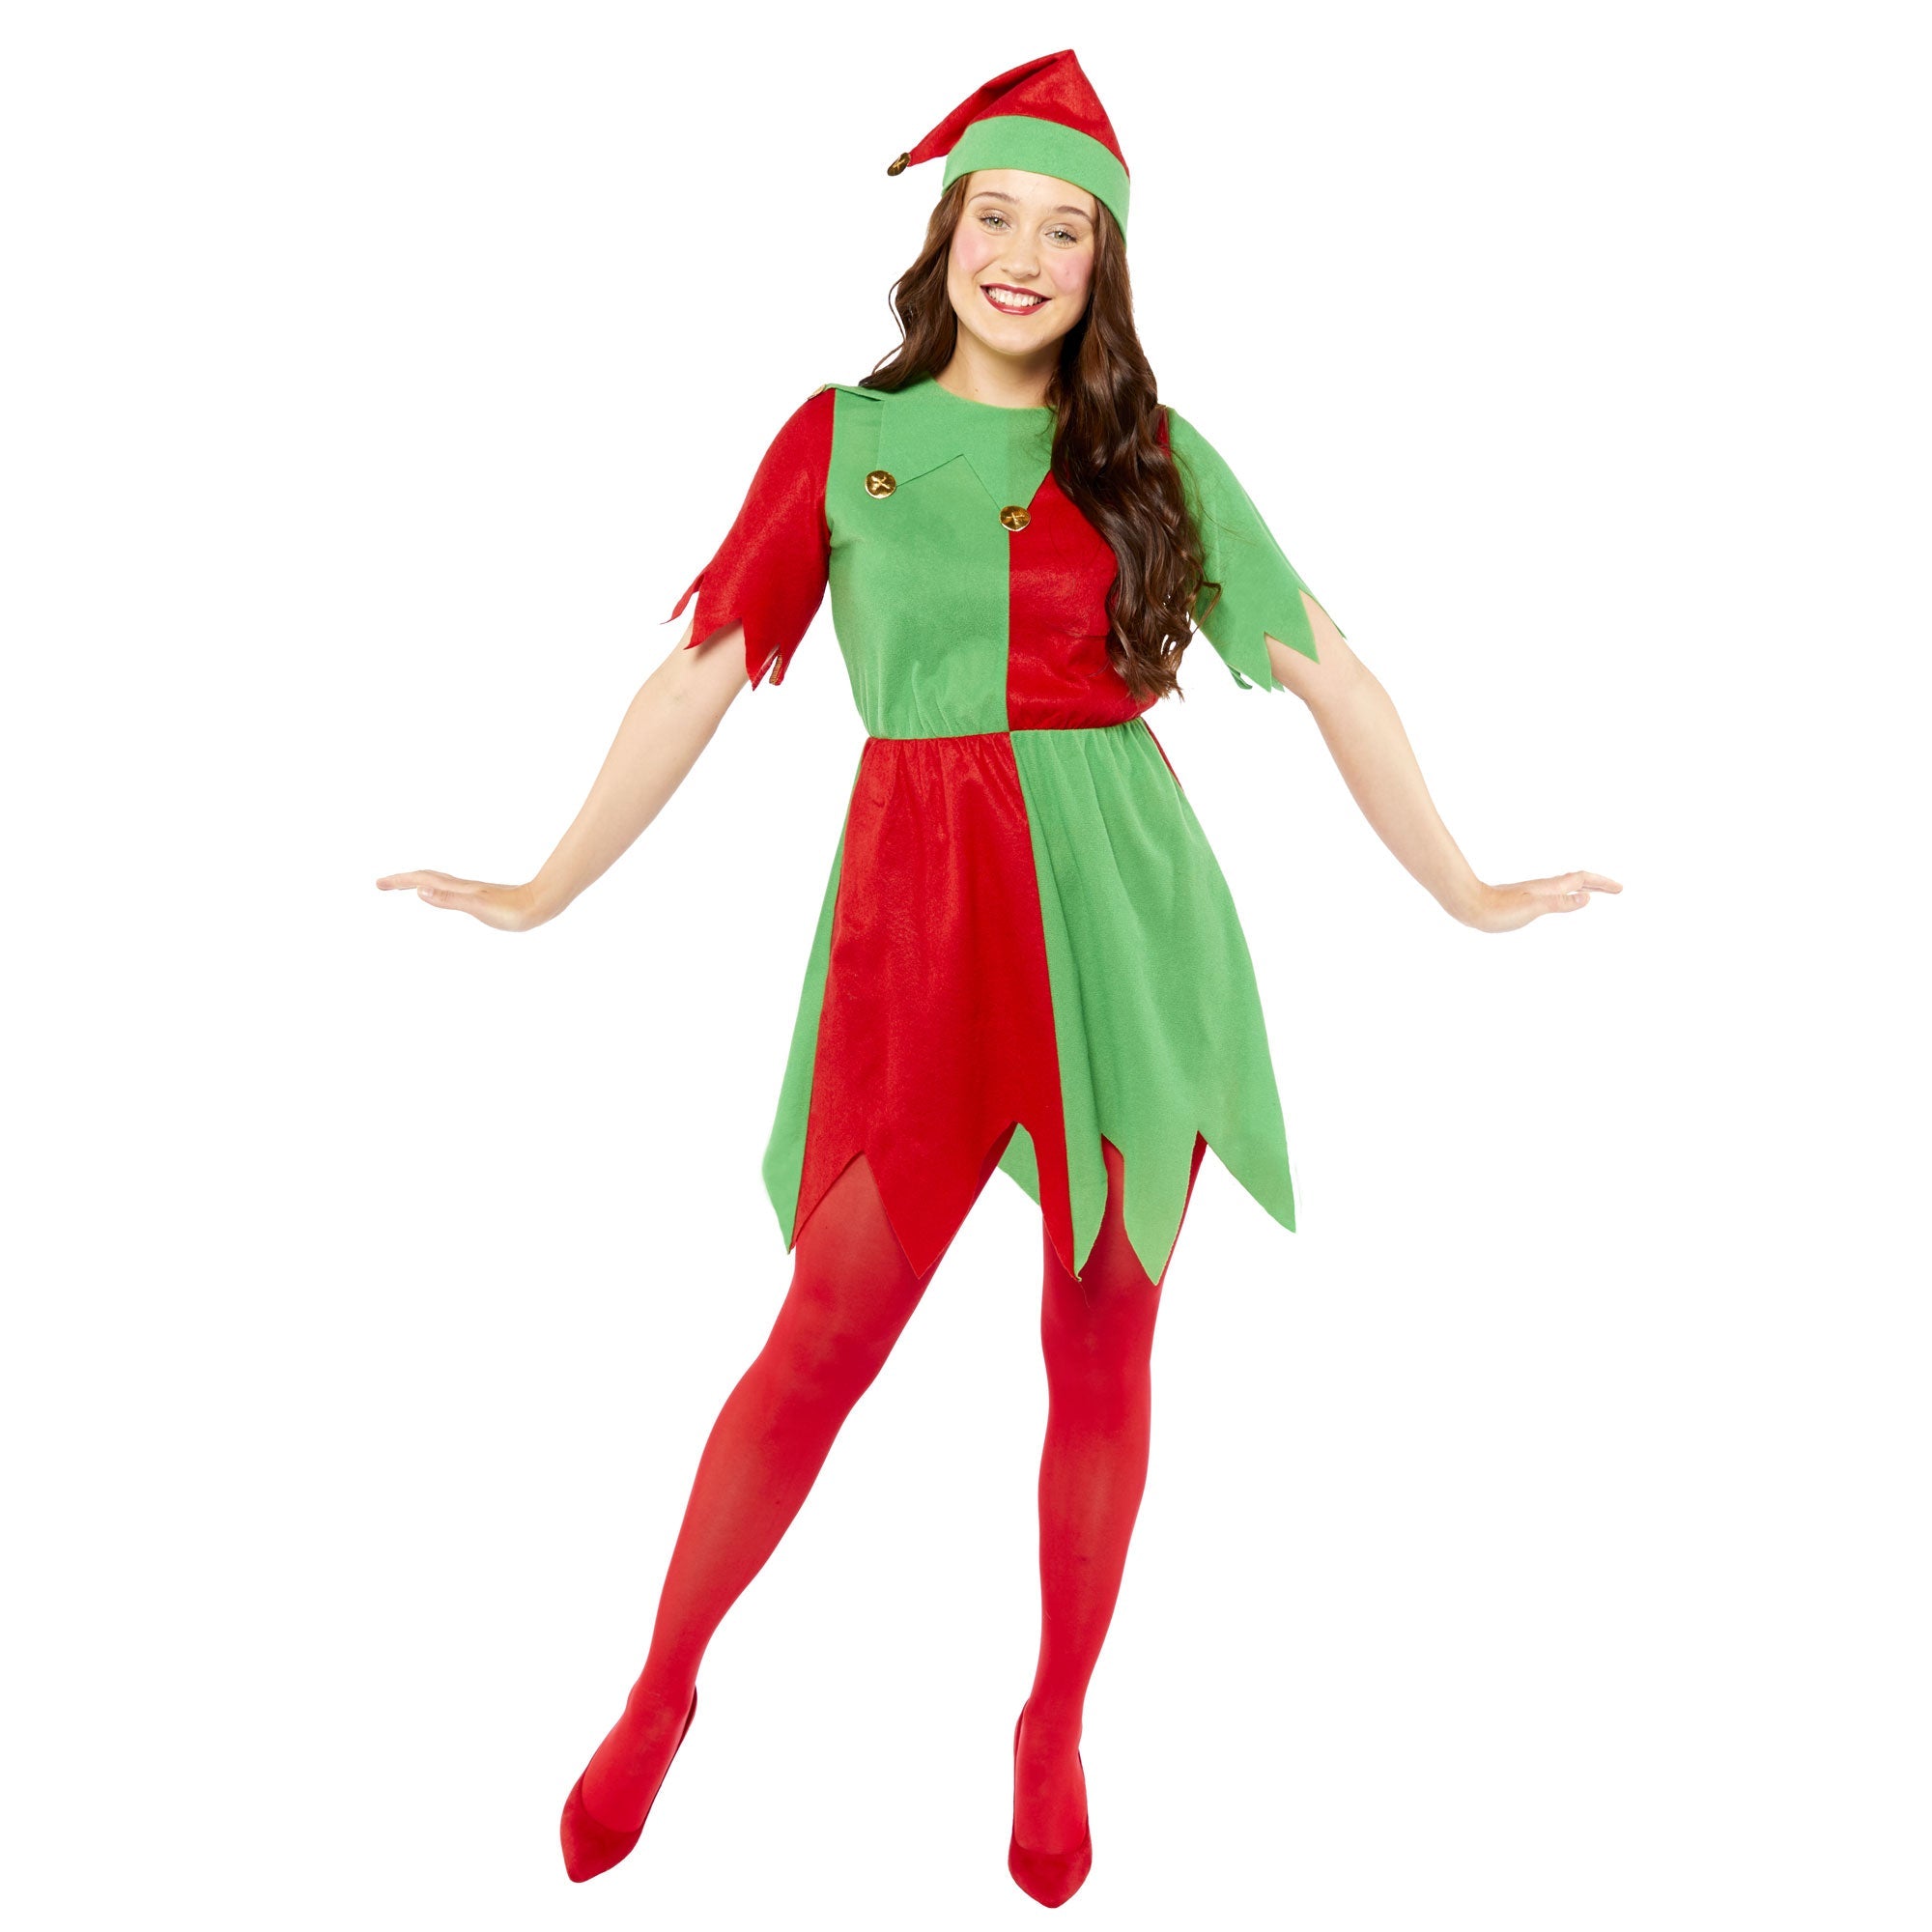 Costume Basic Elf - Adult